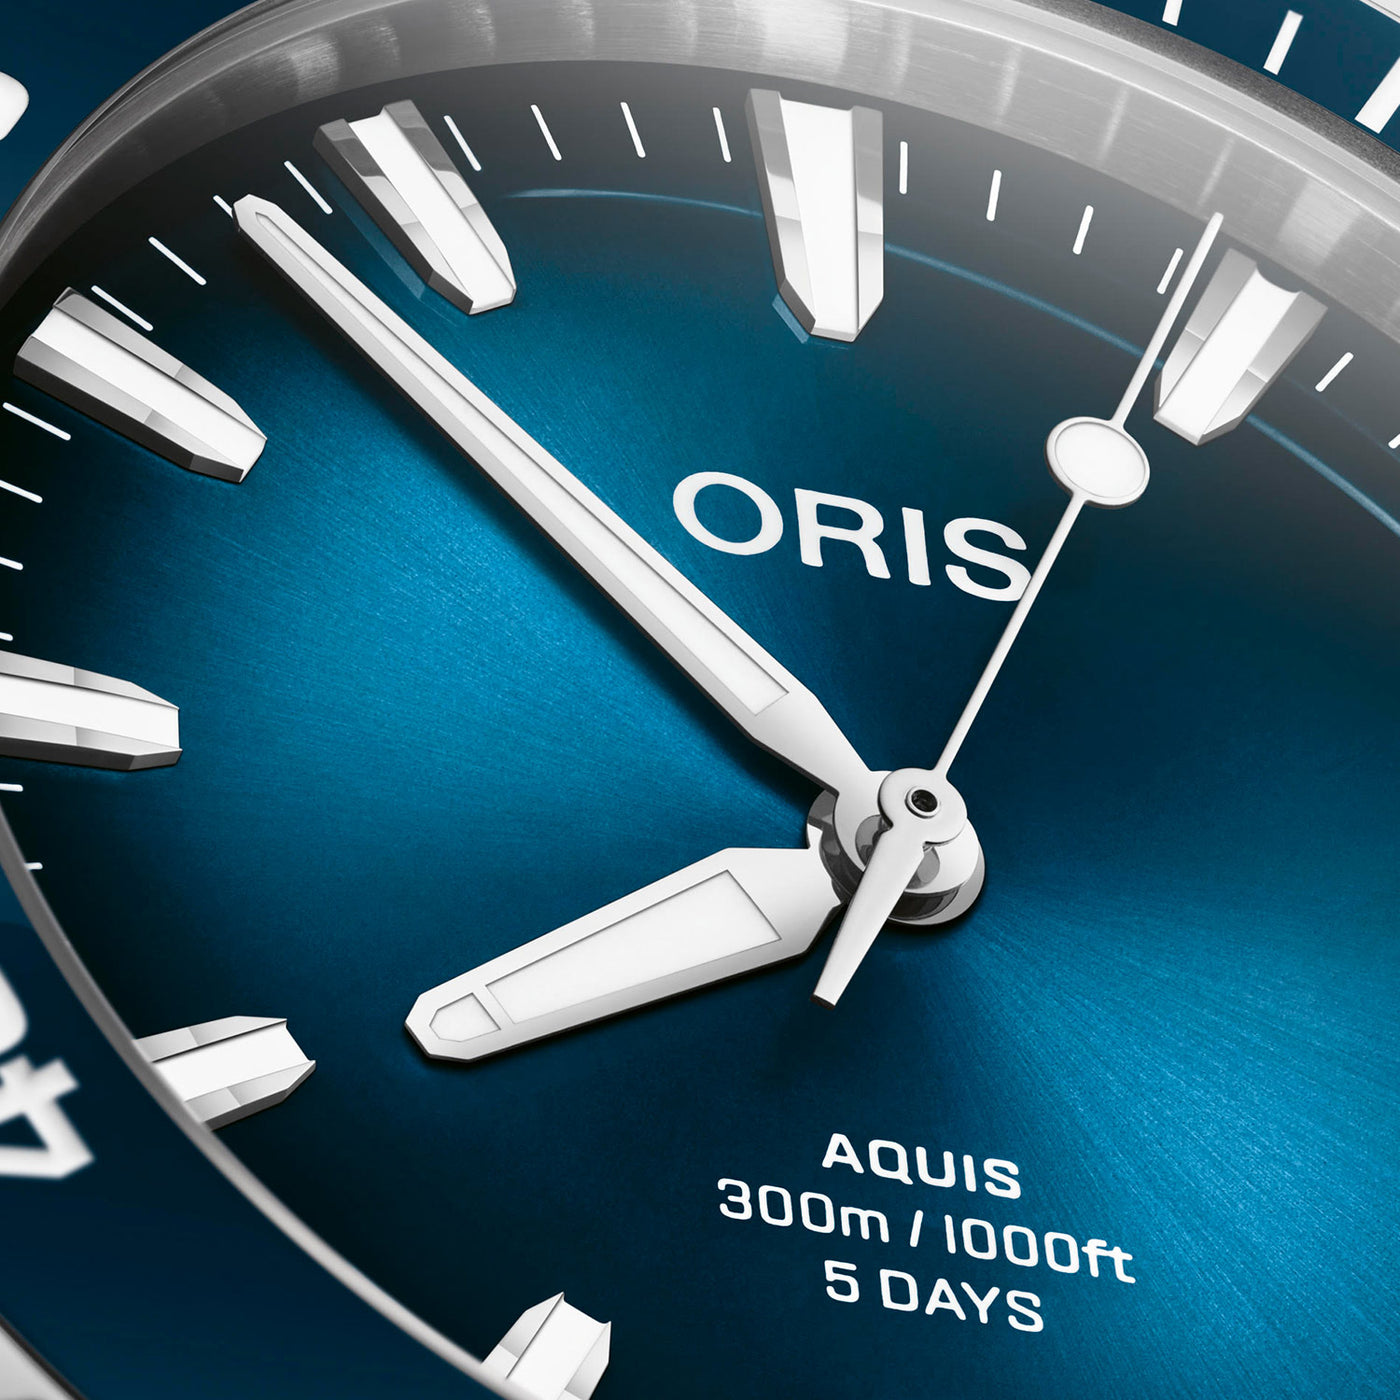 Oris Aquis Calibre 400 Automatic – 01 400 7790 4135-07 4 23 45EB